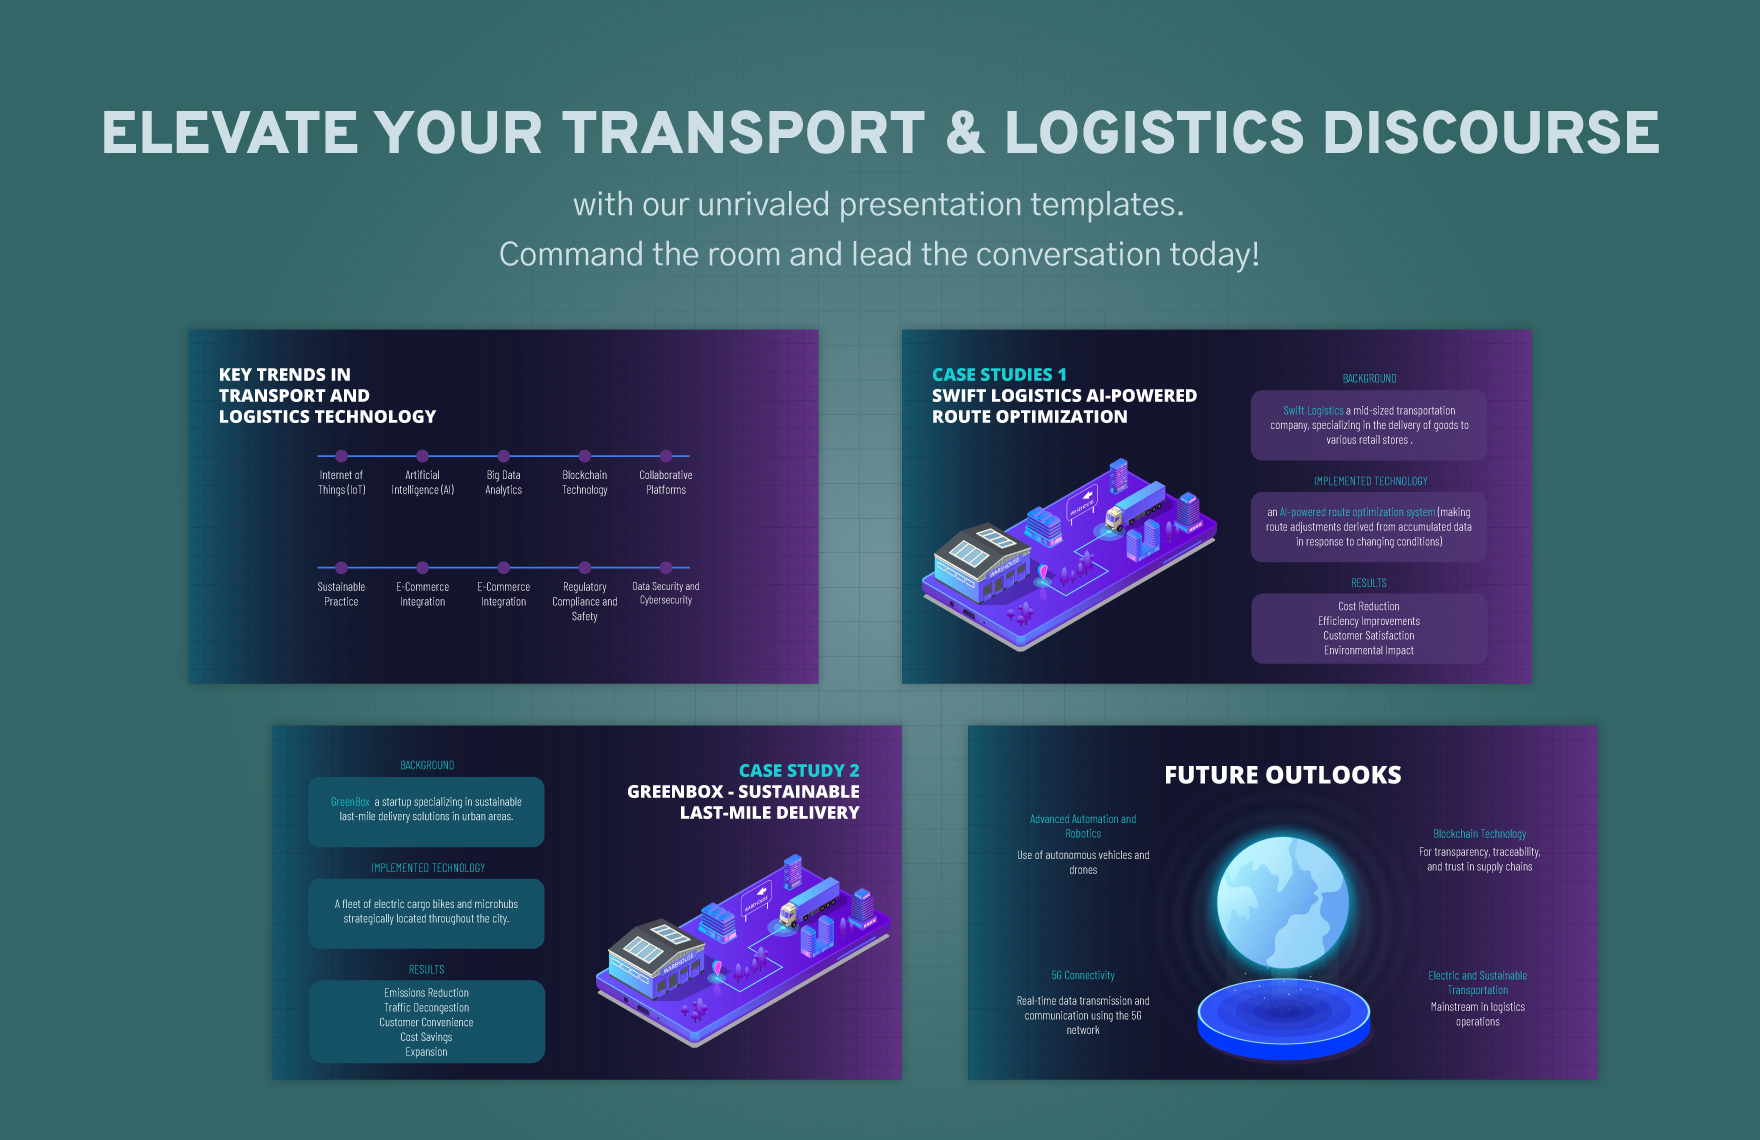 Transport and Logistics Technology Trends Presentation Template